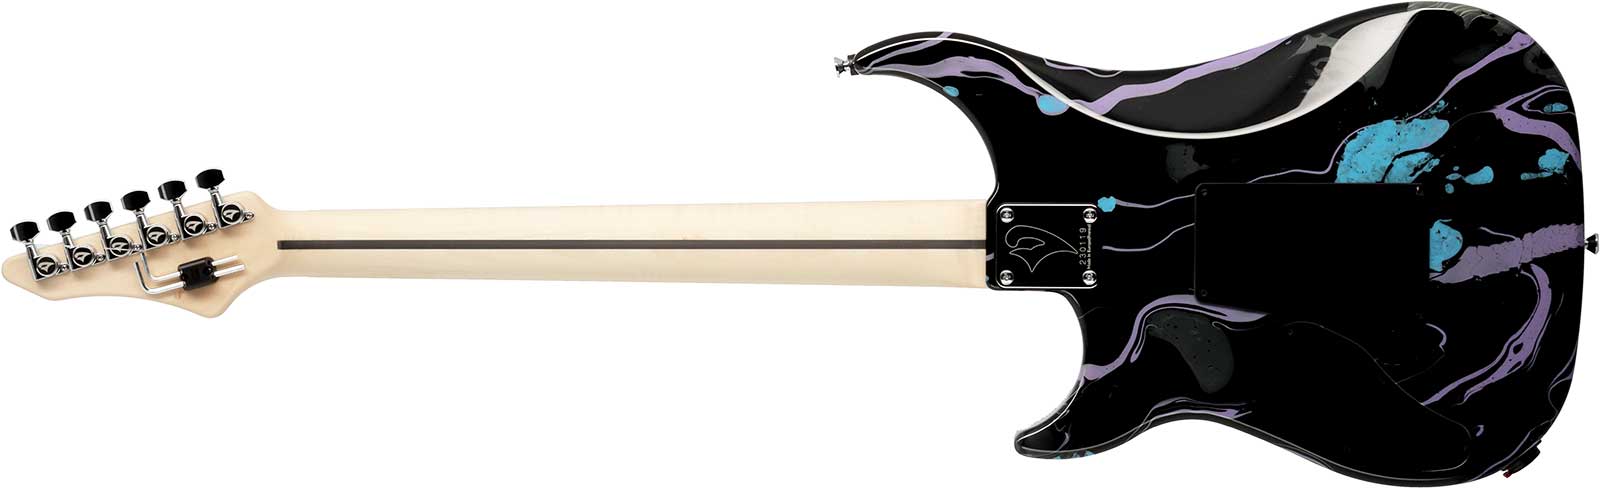 Vigier Ron Thal Bfoot Excalibur Signature Hs Fr Rw - Rock Art Black/purple/blue - Kenmerkende elektrische gitaar - Variation 1